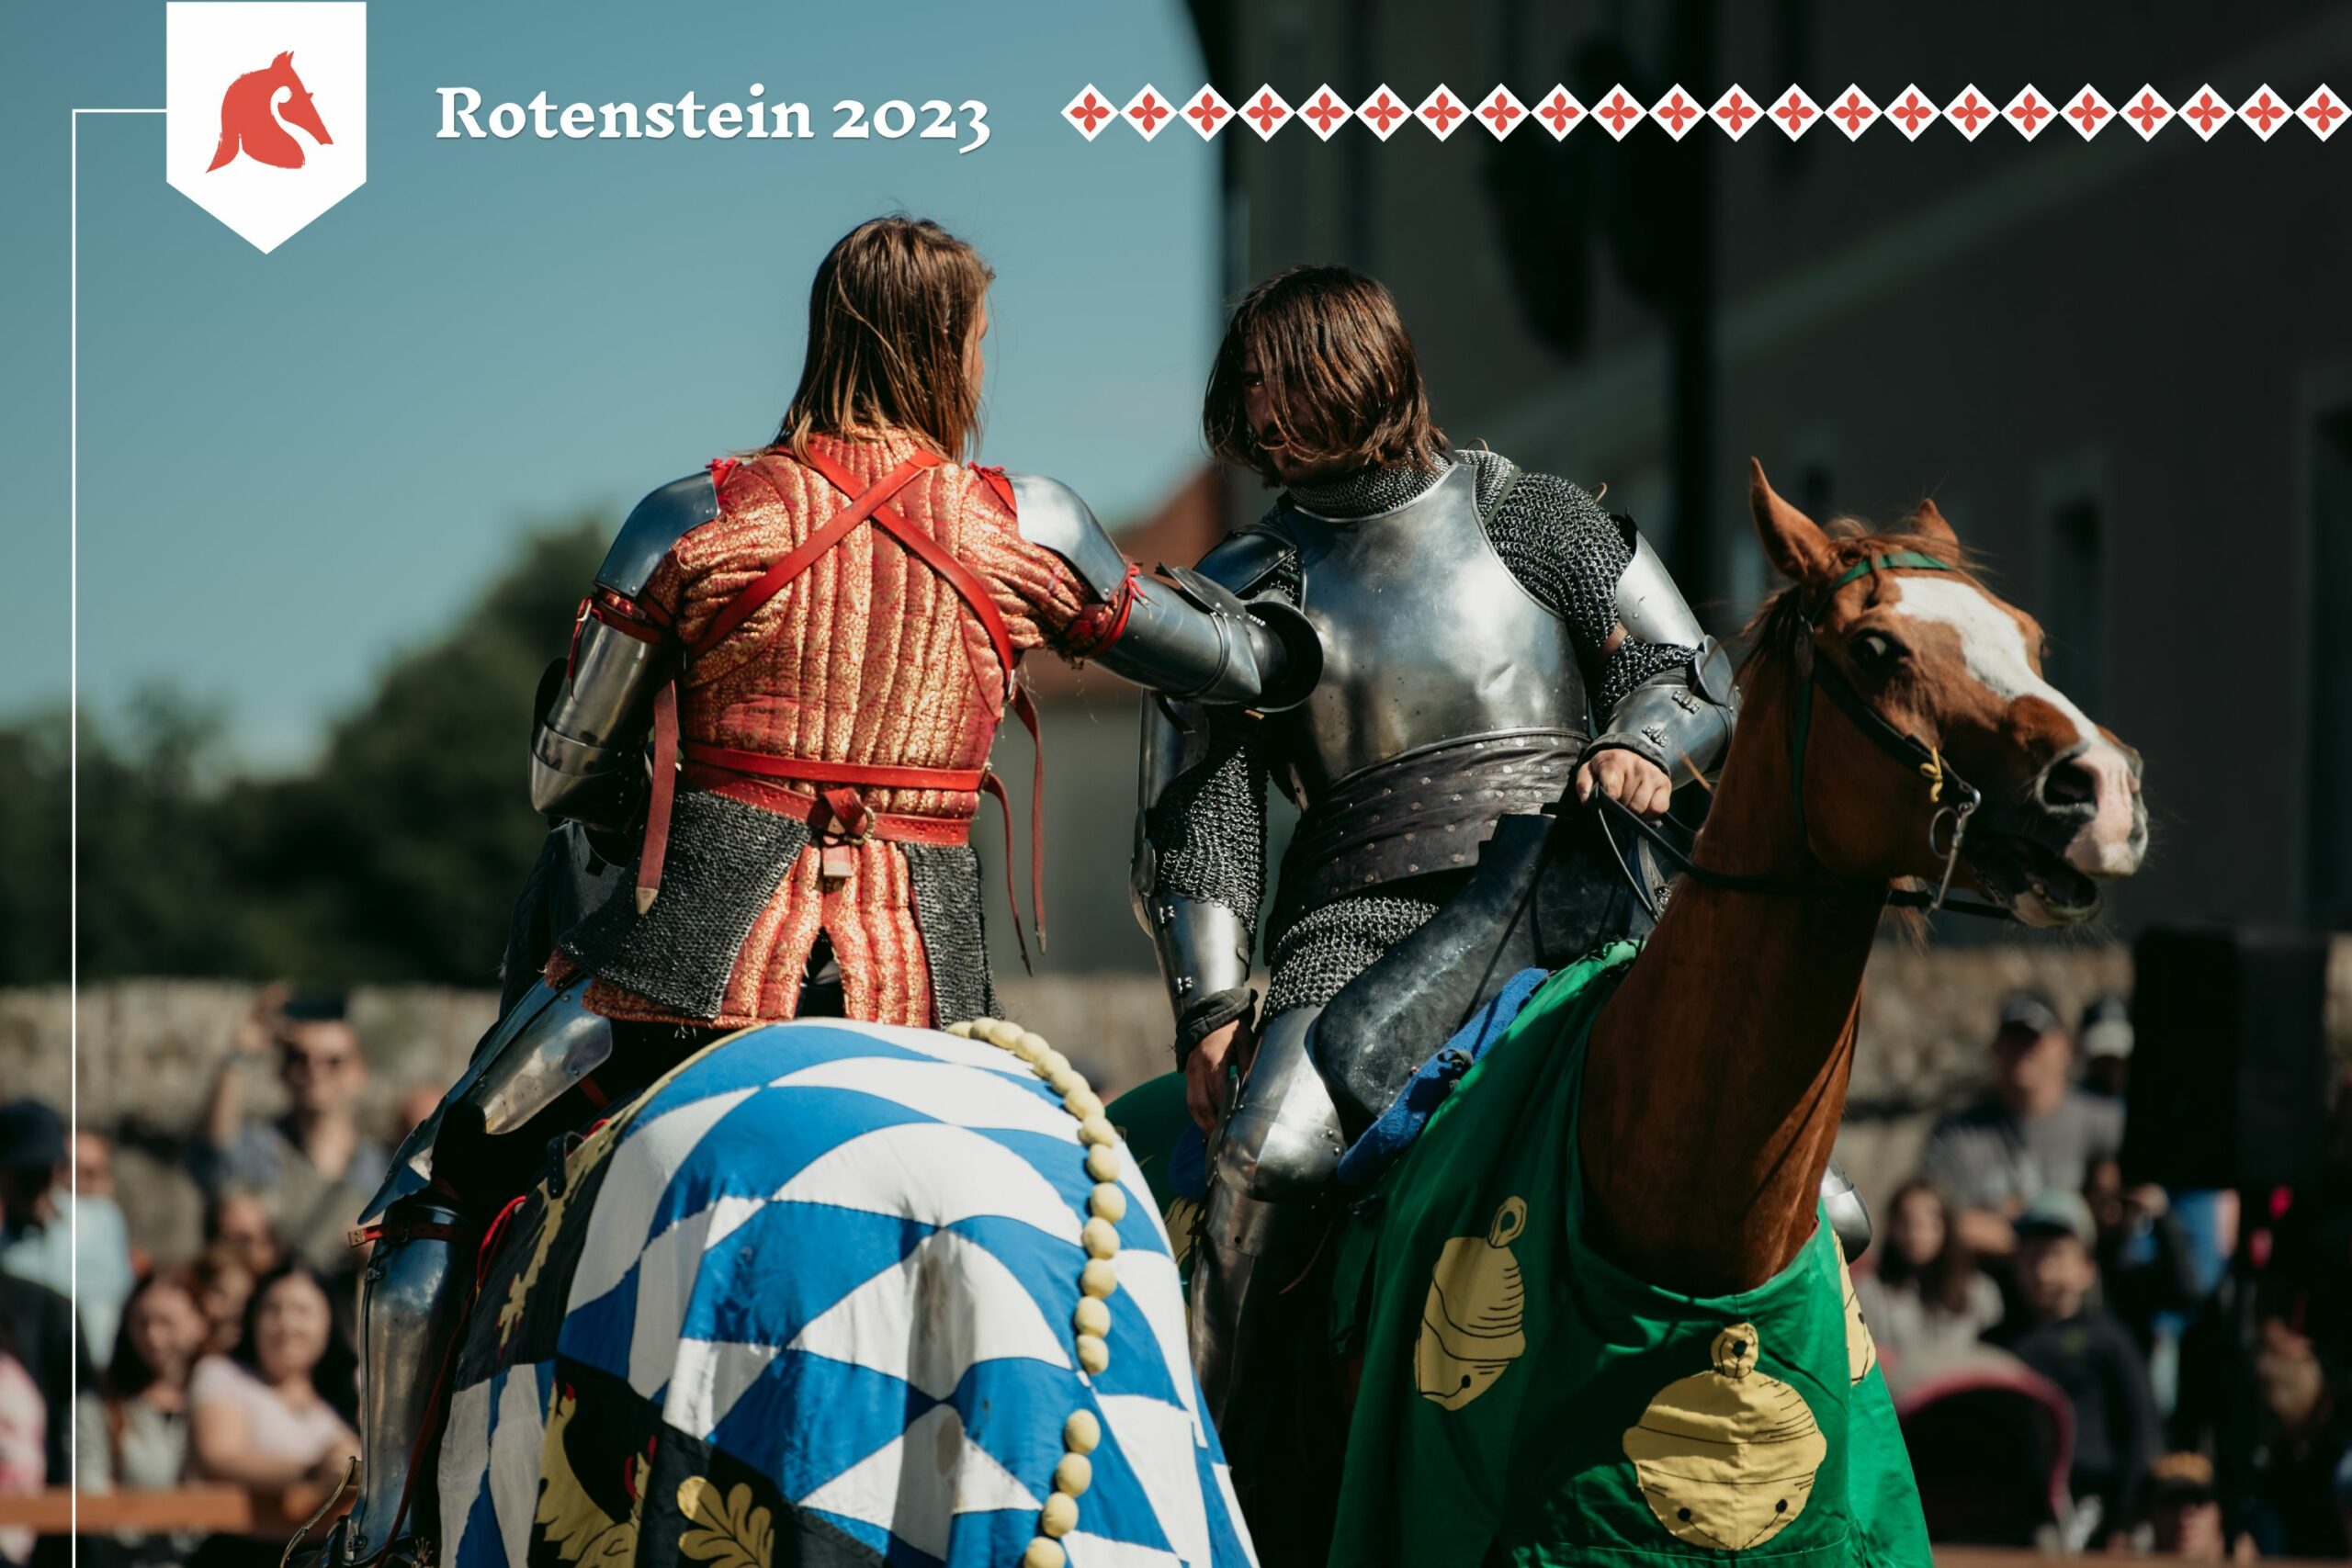 rytiersky-festival-rotenstein.-posledny-majovy-vikend-bude-patrit-oslave-historie